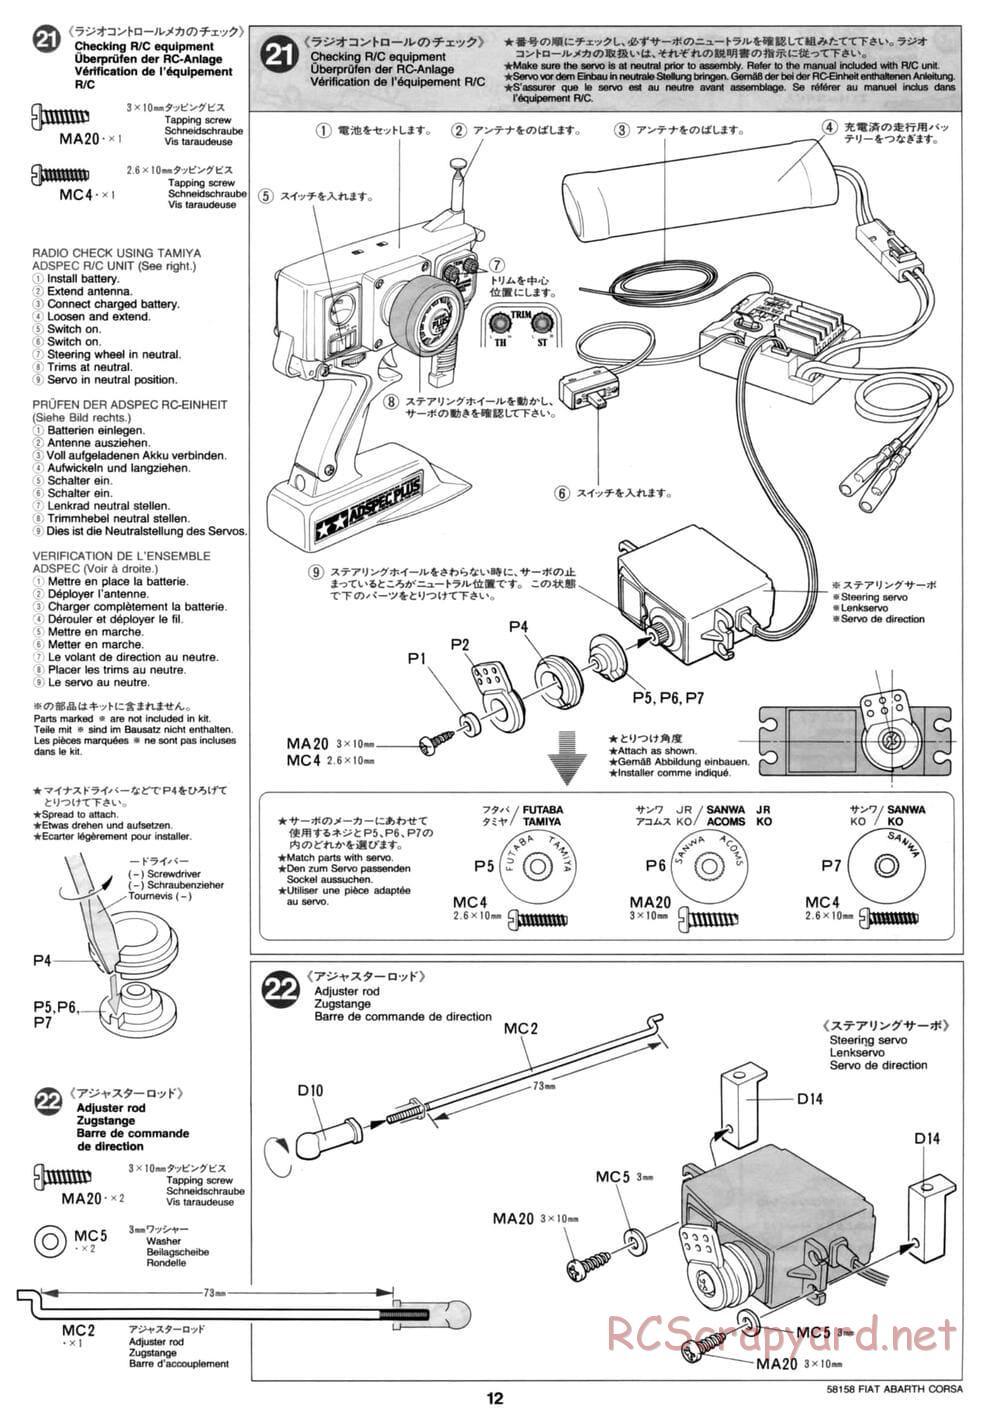 Tamiya - Fiat Abarth 1000 TCR Berlina Corse - M02 Chassis - Manual - Page 12